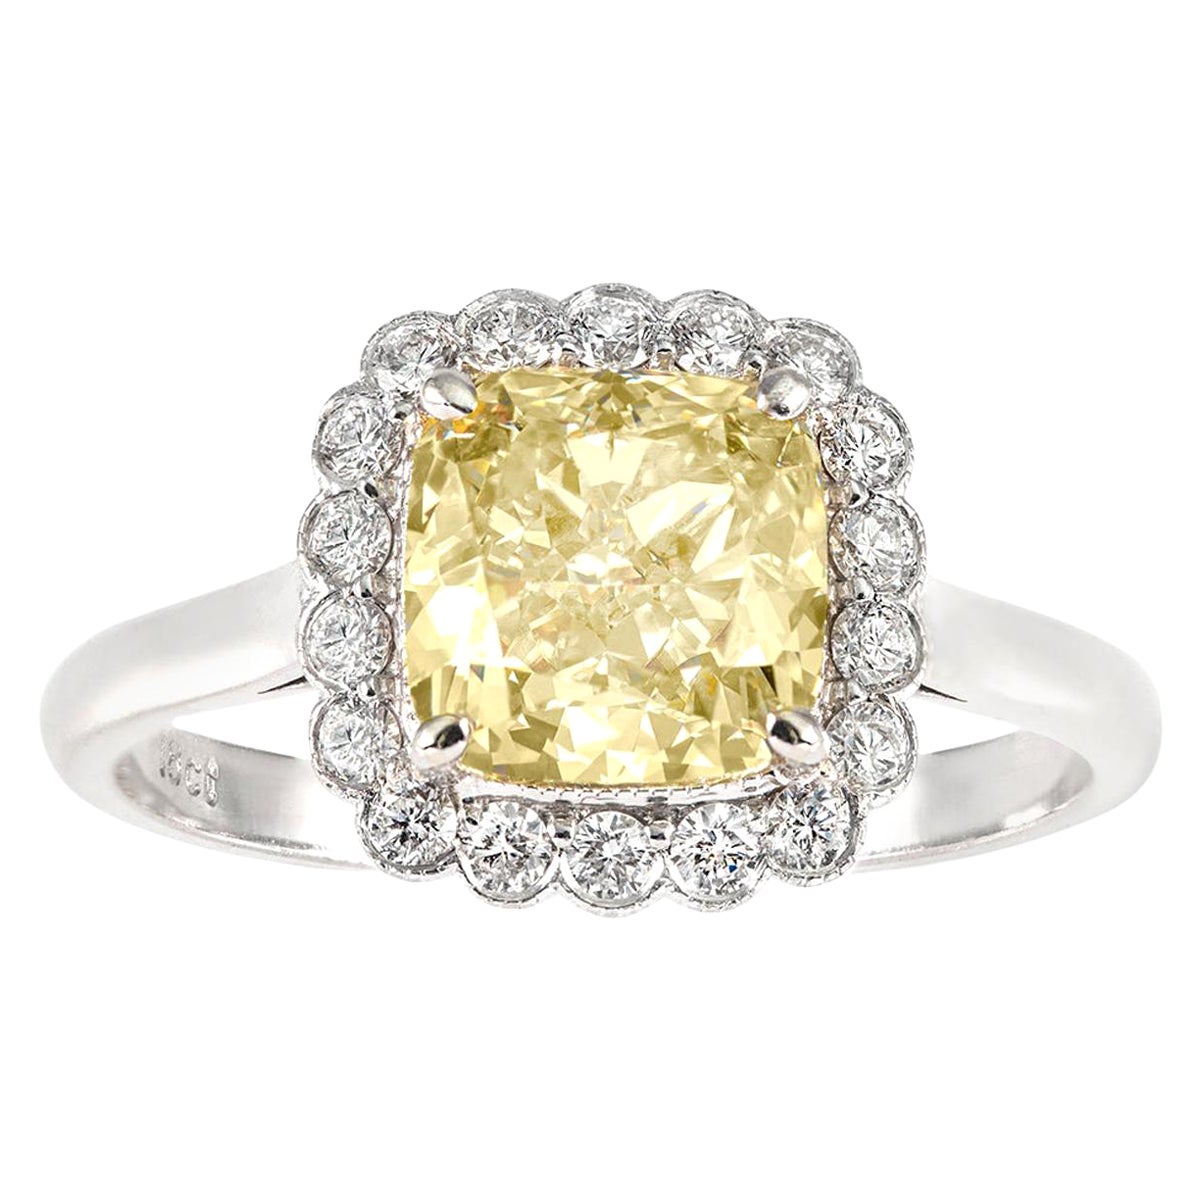 Fancy Intense Yellow Cushion Cut Diamond in Diamond Scalloped Cluster Ring 18ct